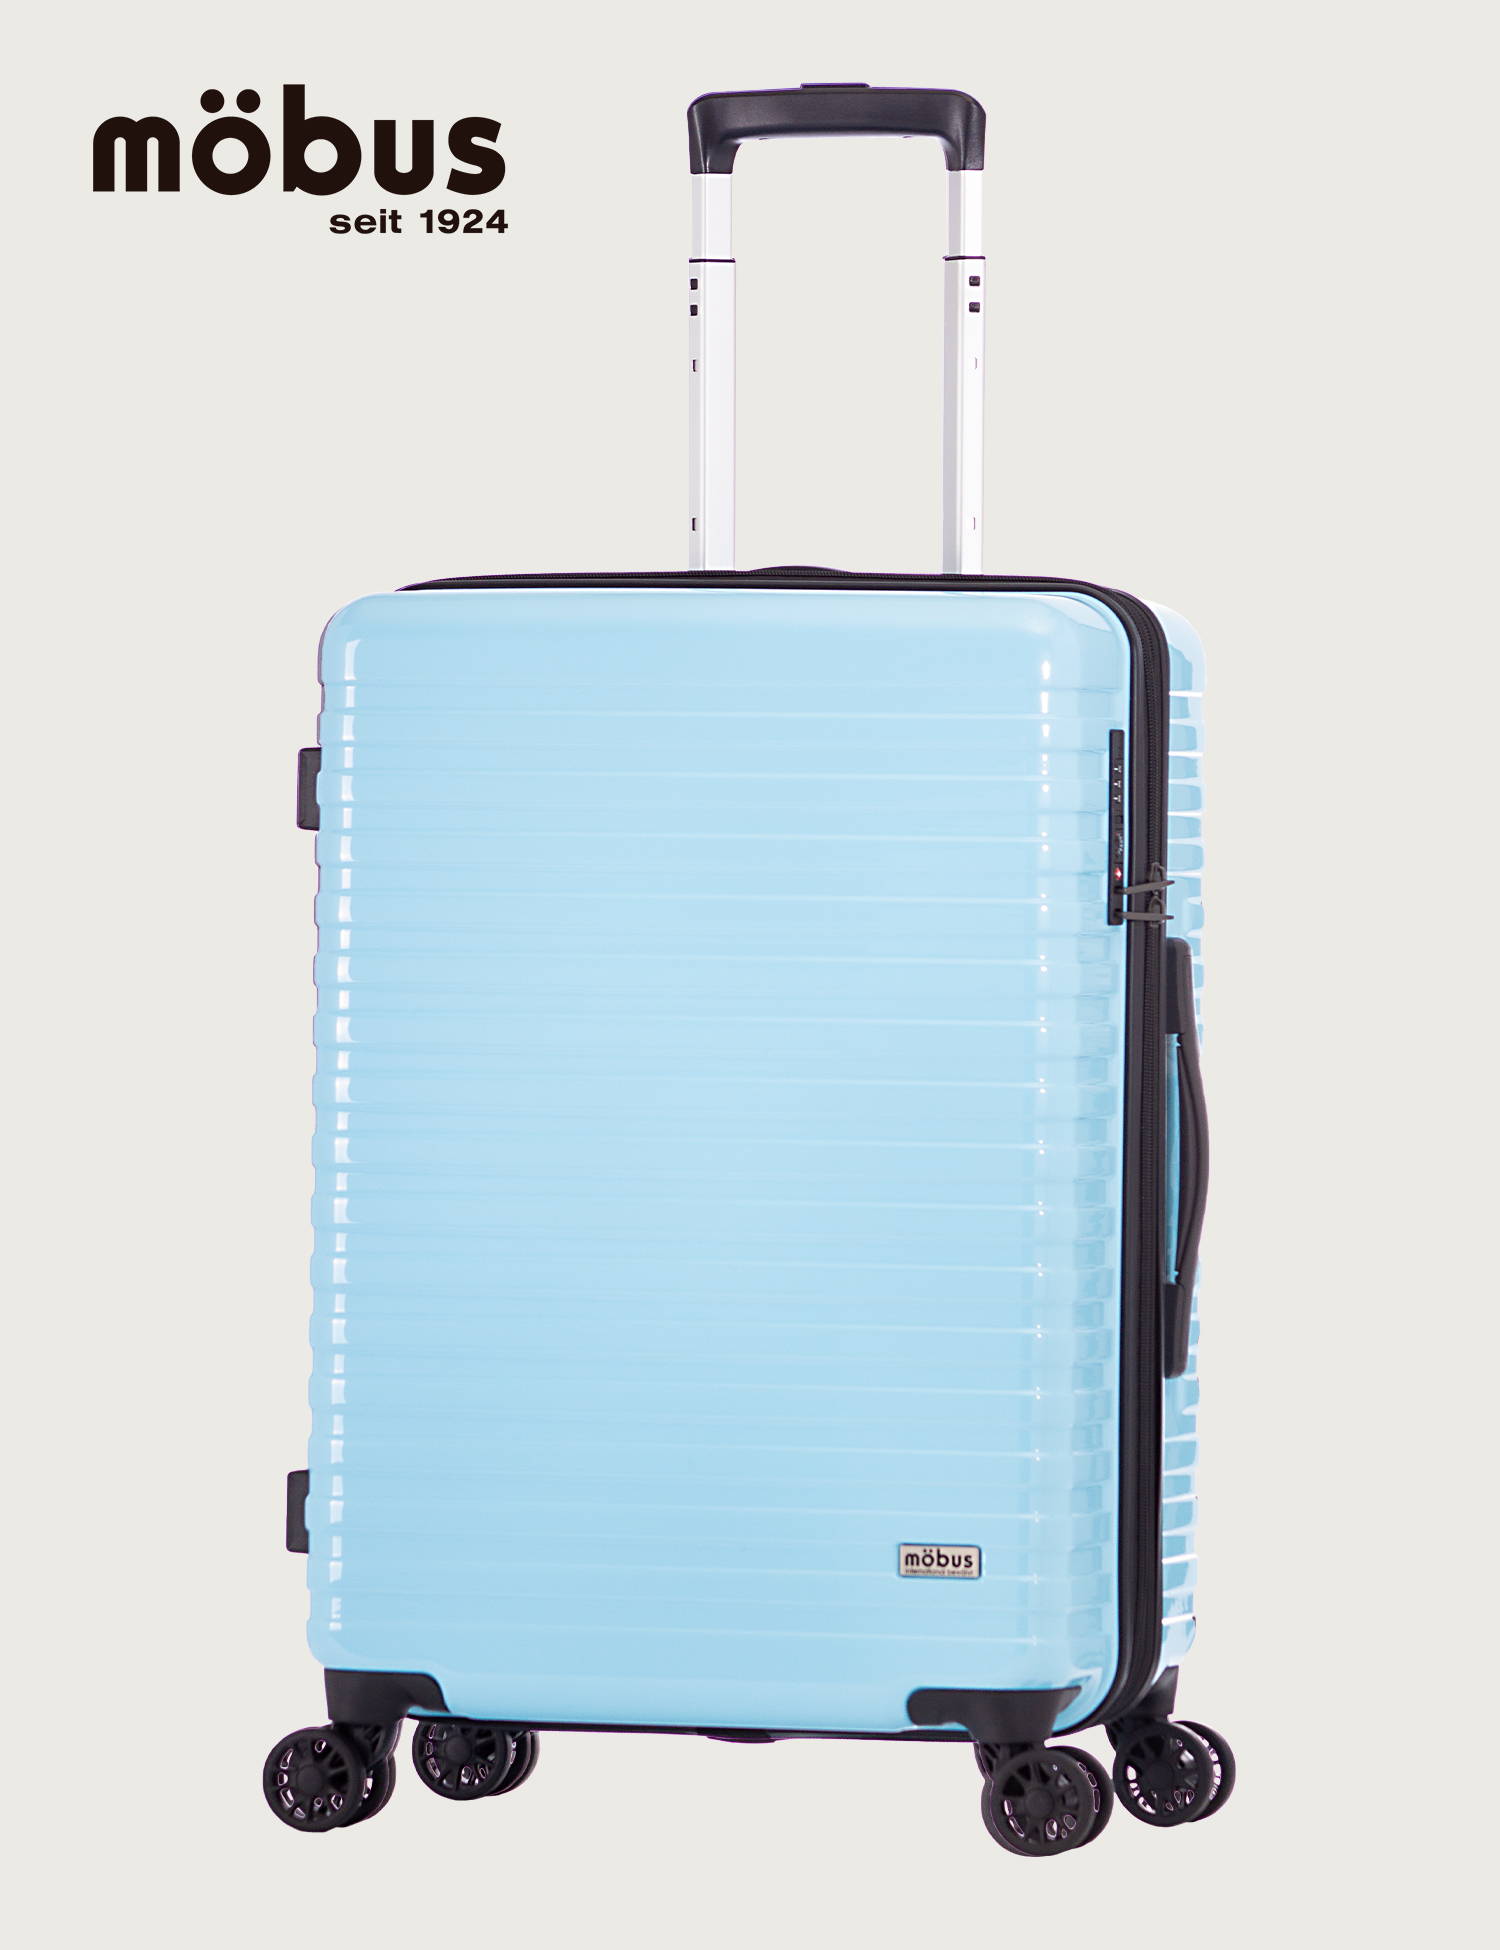 mobus | アジア・ラゲージ 公式サイト | Asia Luggage